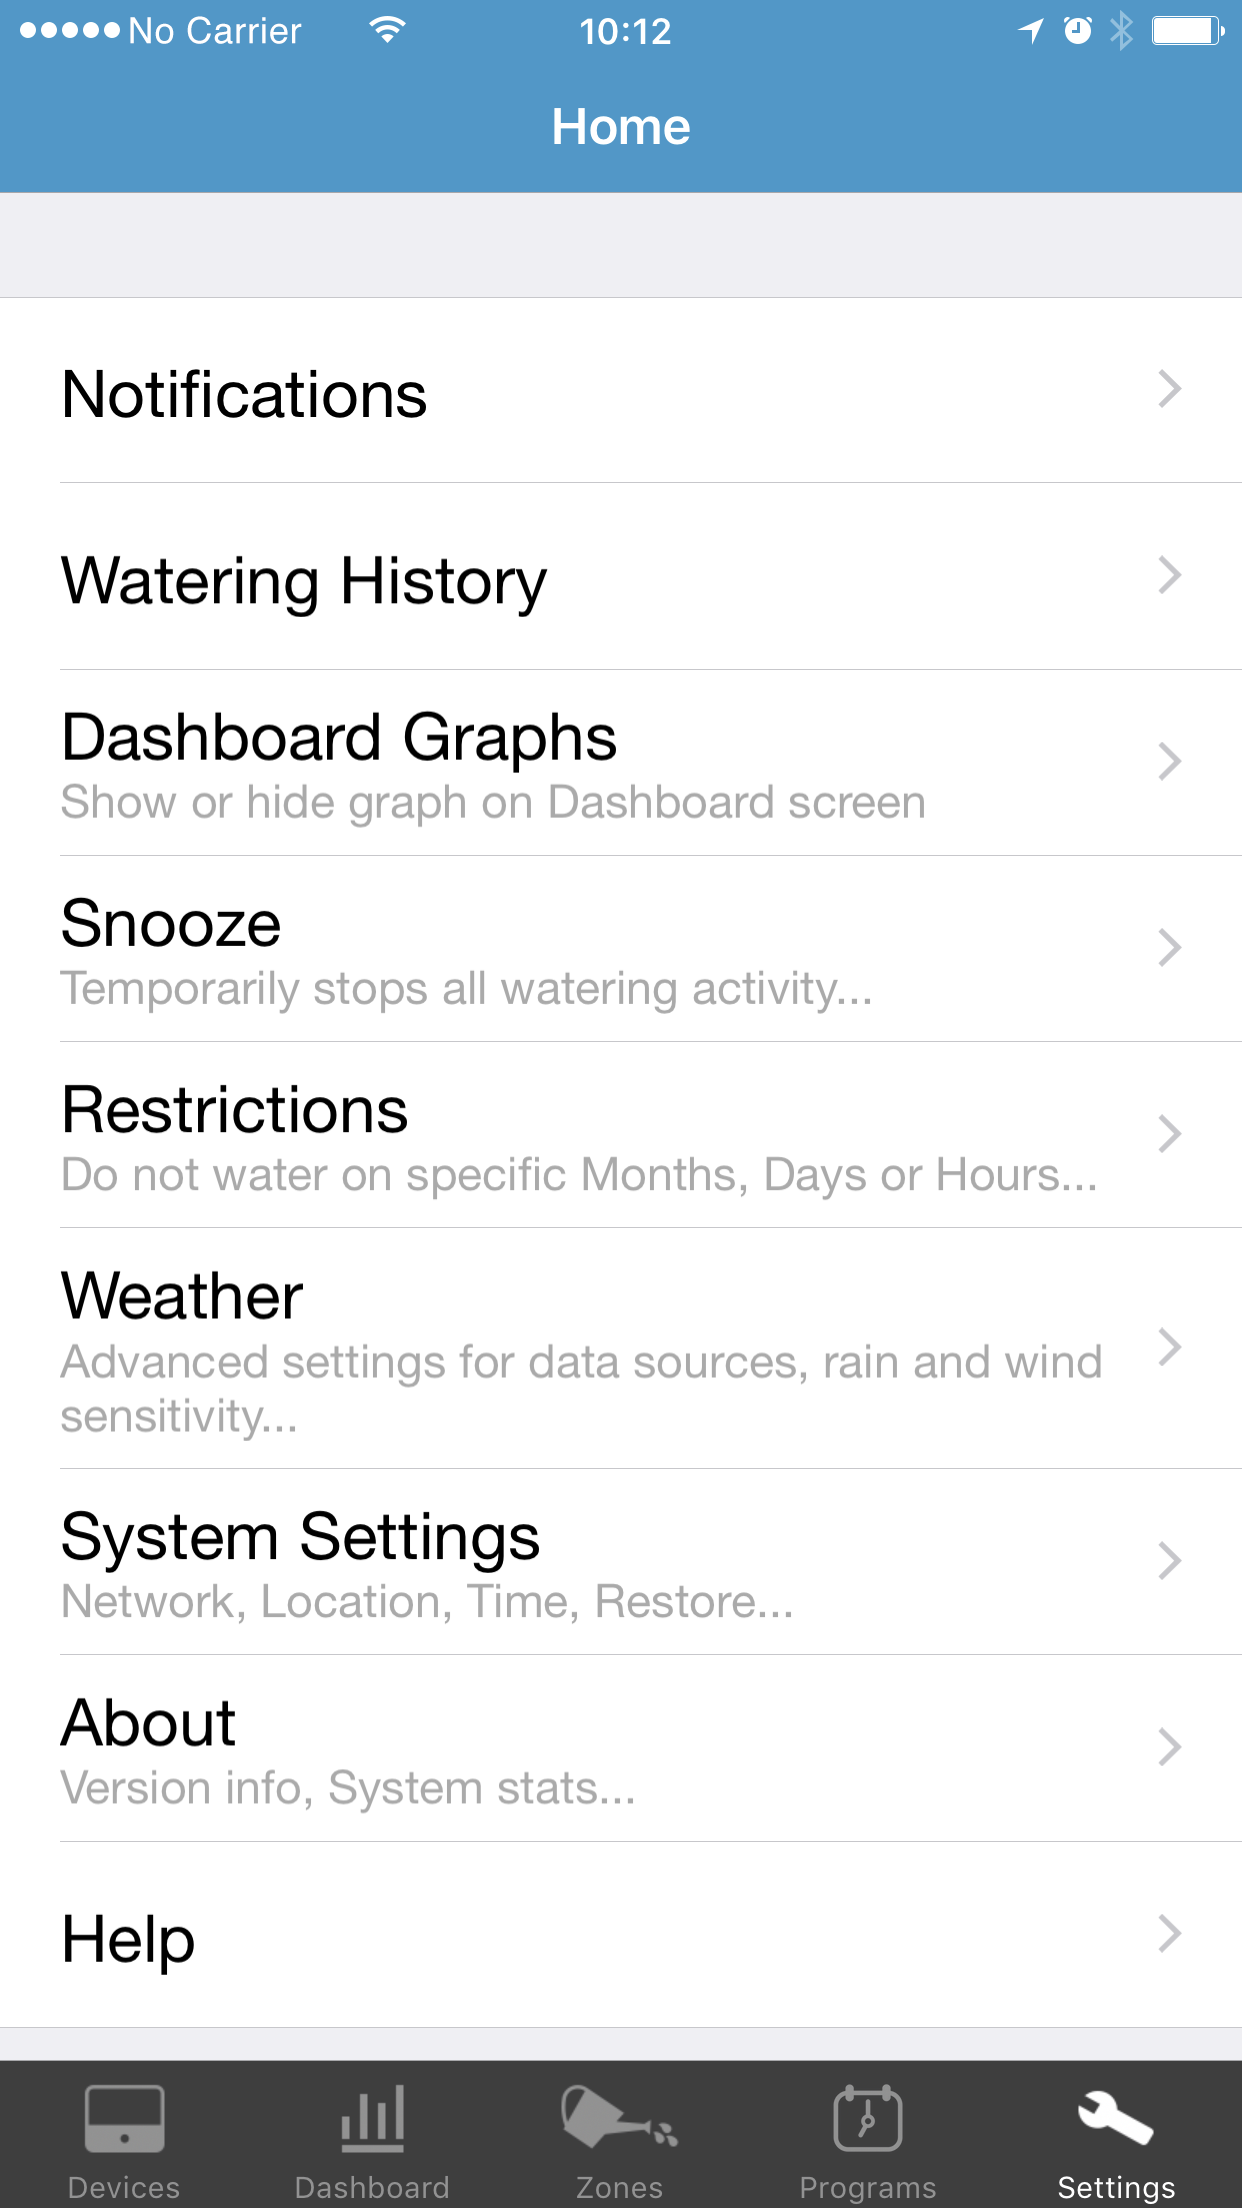 Settings edit screen of the RainMachine mobile application